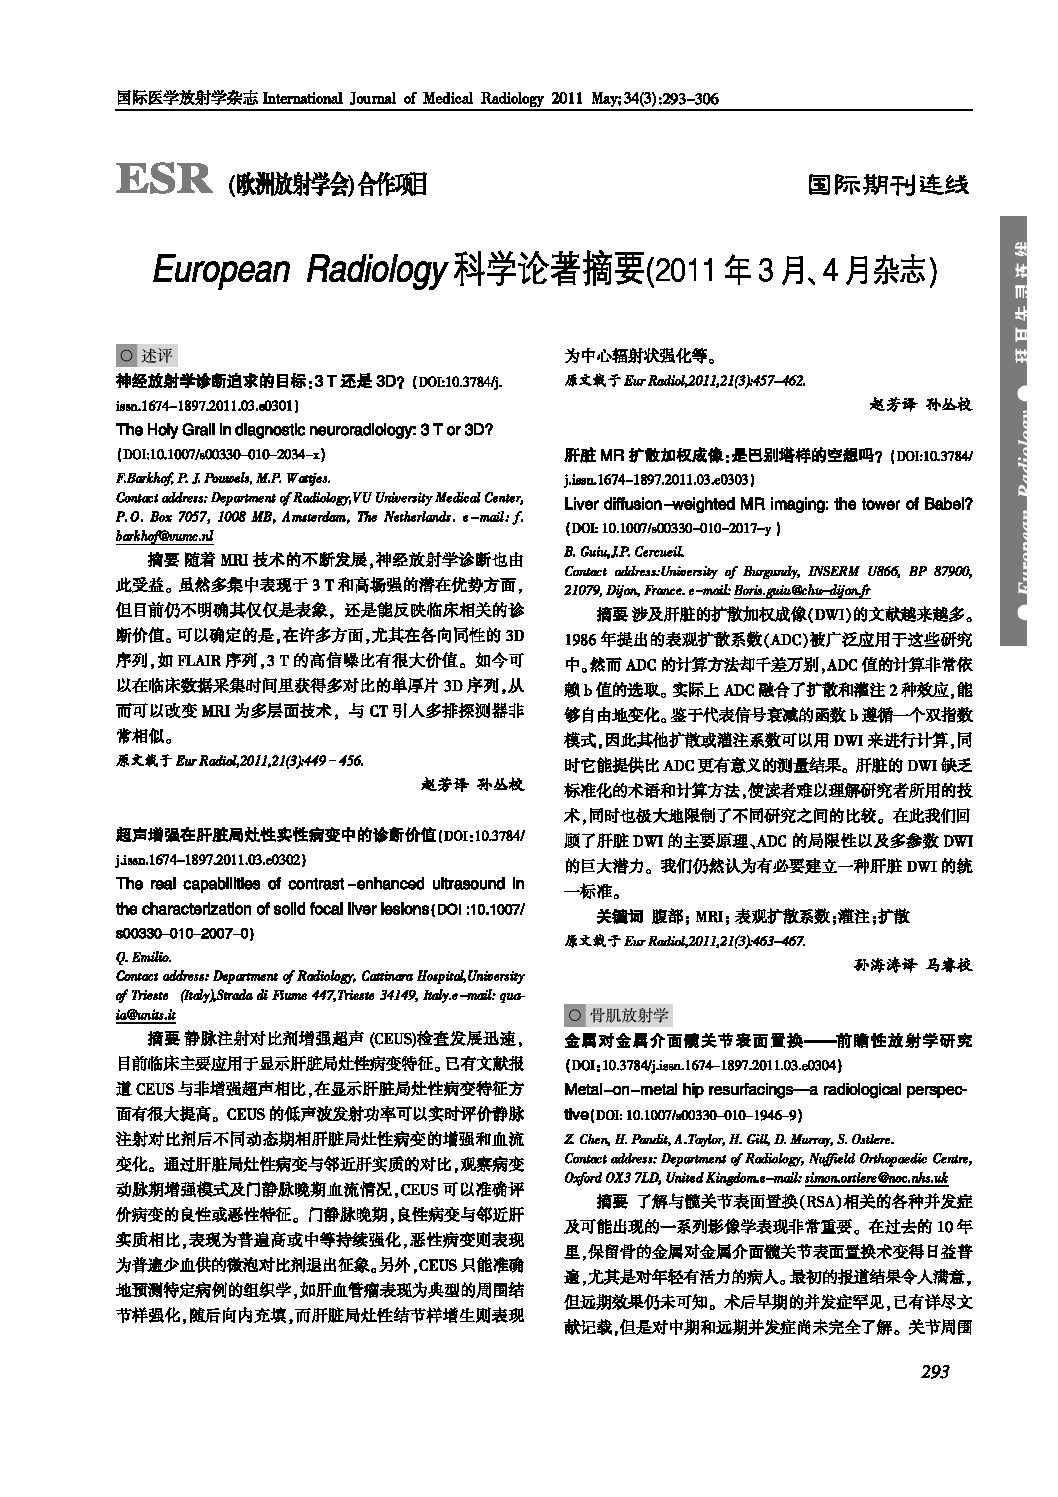 European Radiology Vol. 2011, March-April (17MB) European Radiology Vol. 2011, March-April (17MB)